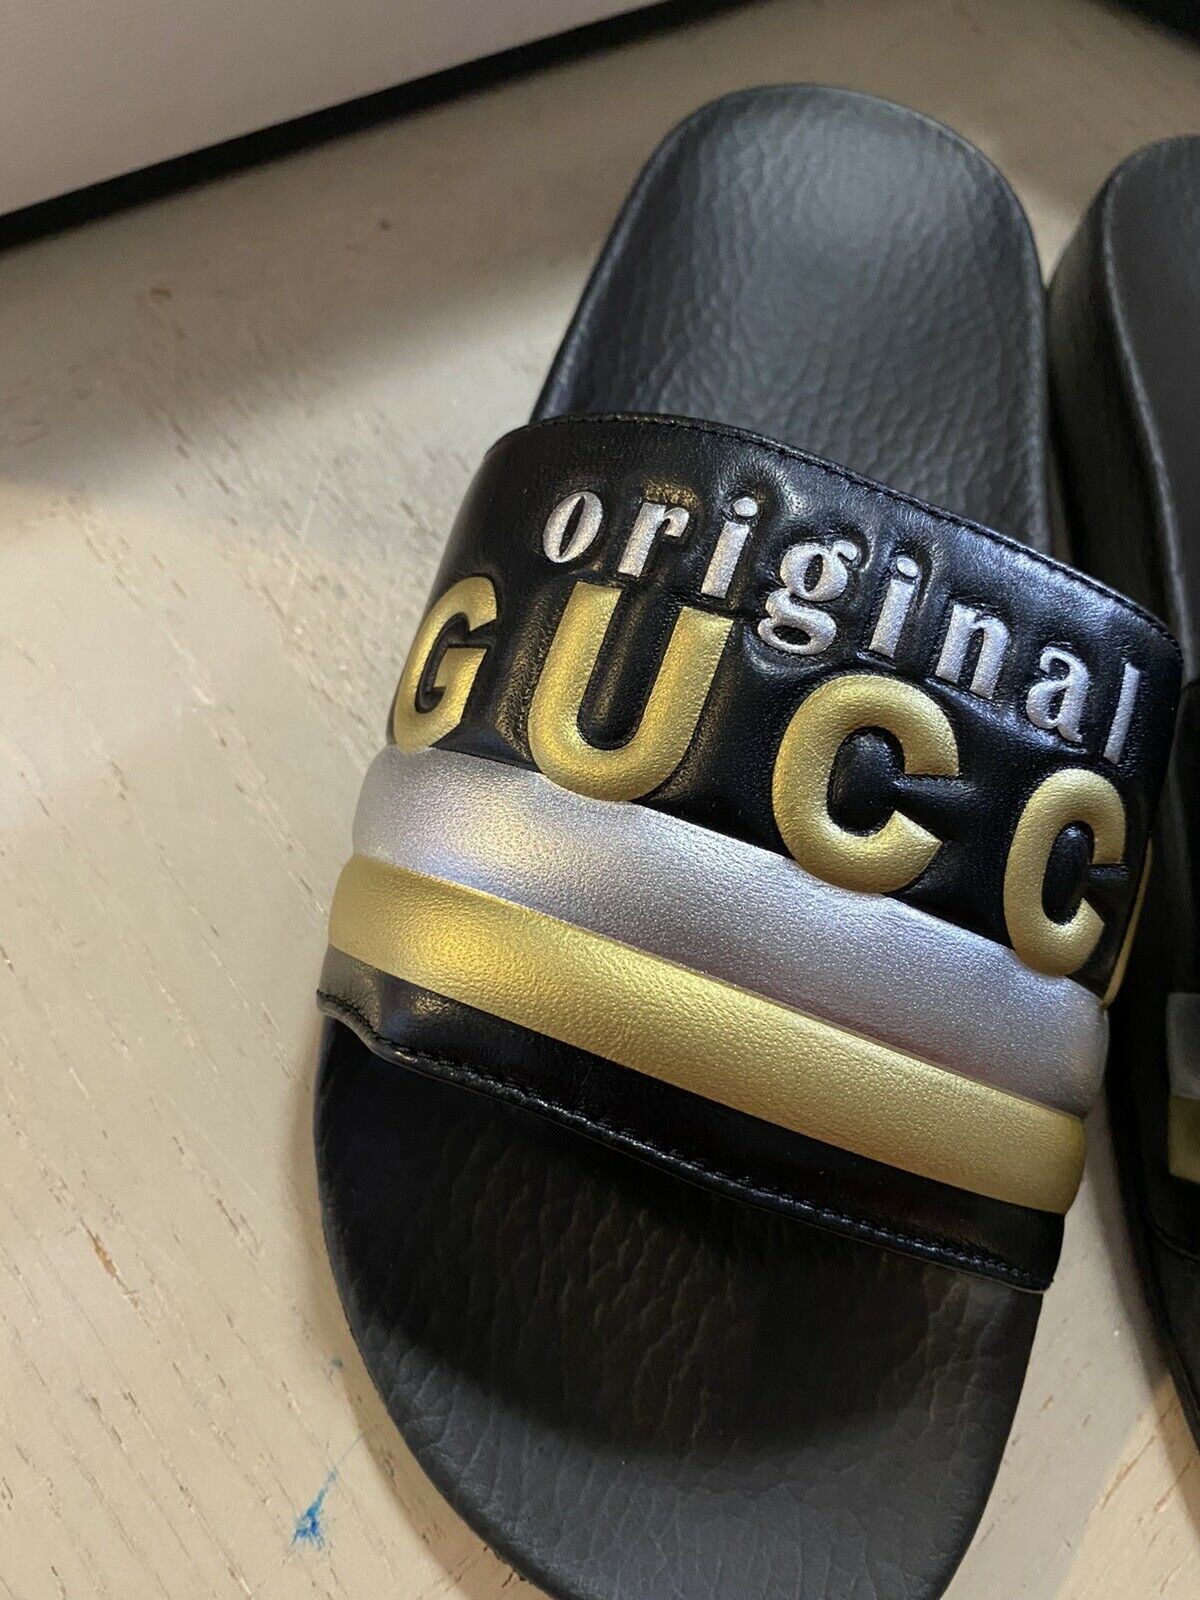 NIB Gucci Original Damen-Sandalenschuhe Schwarz/Gold/Silber 8 US (38 Eu) Italien